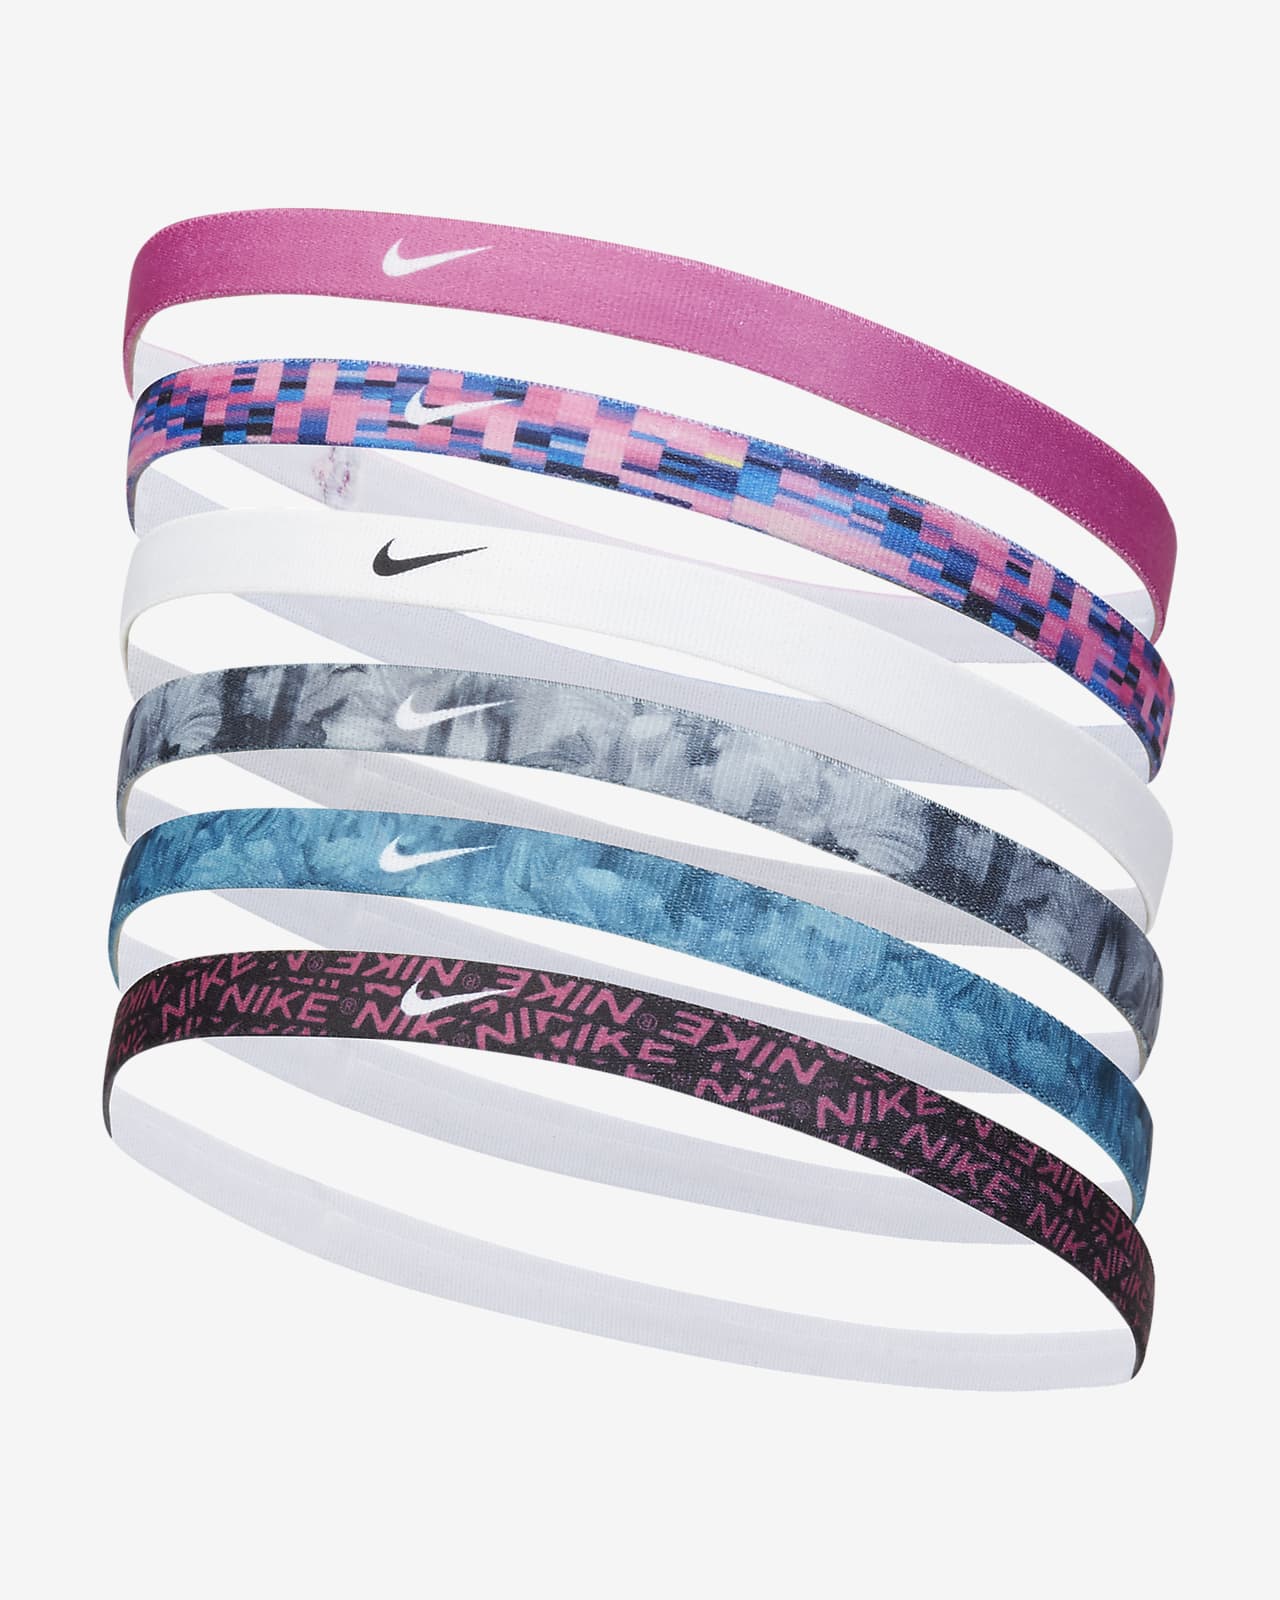 Nike Stirnbänder mit Print (6er-Pack)